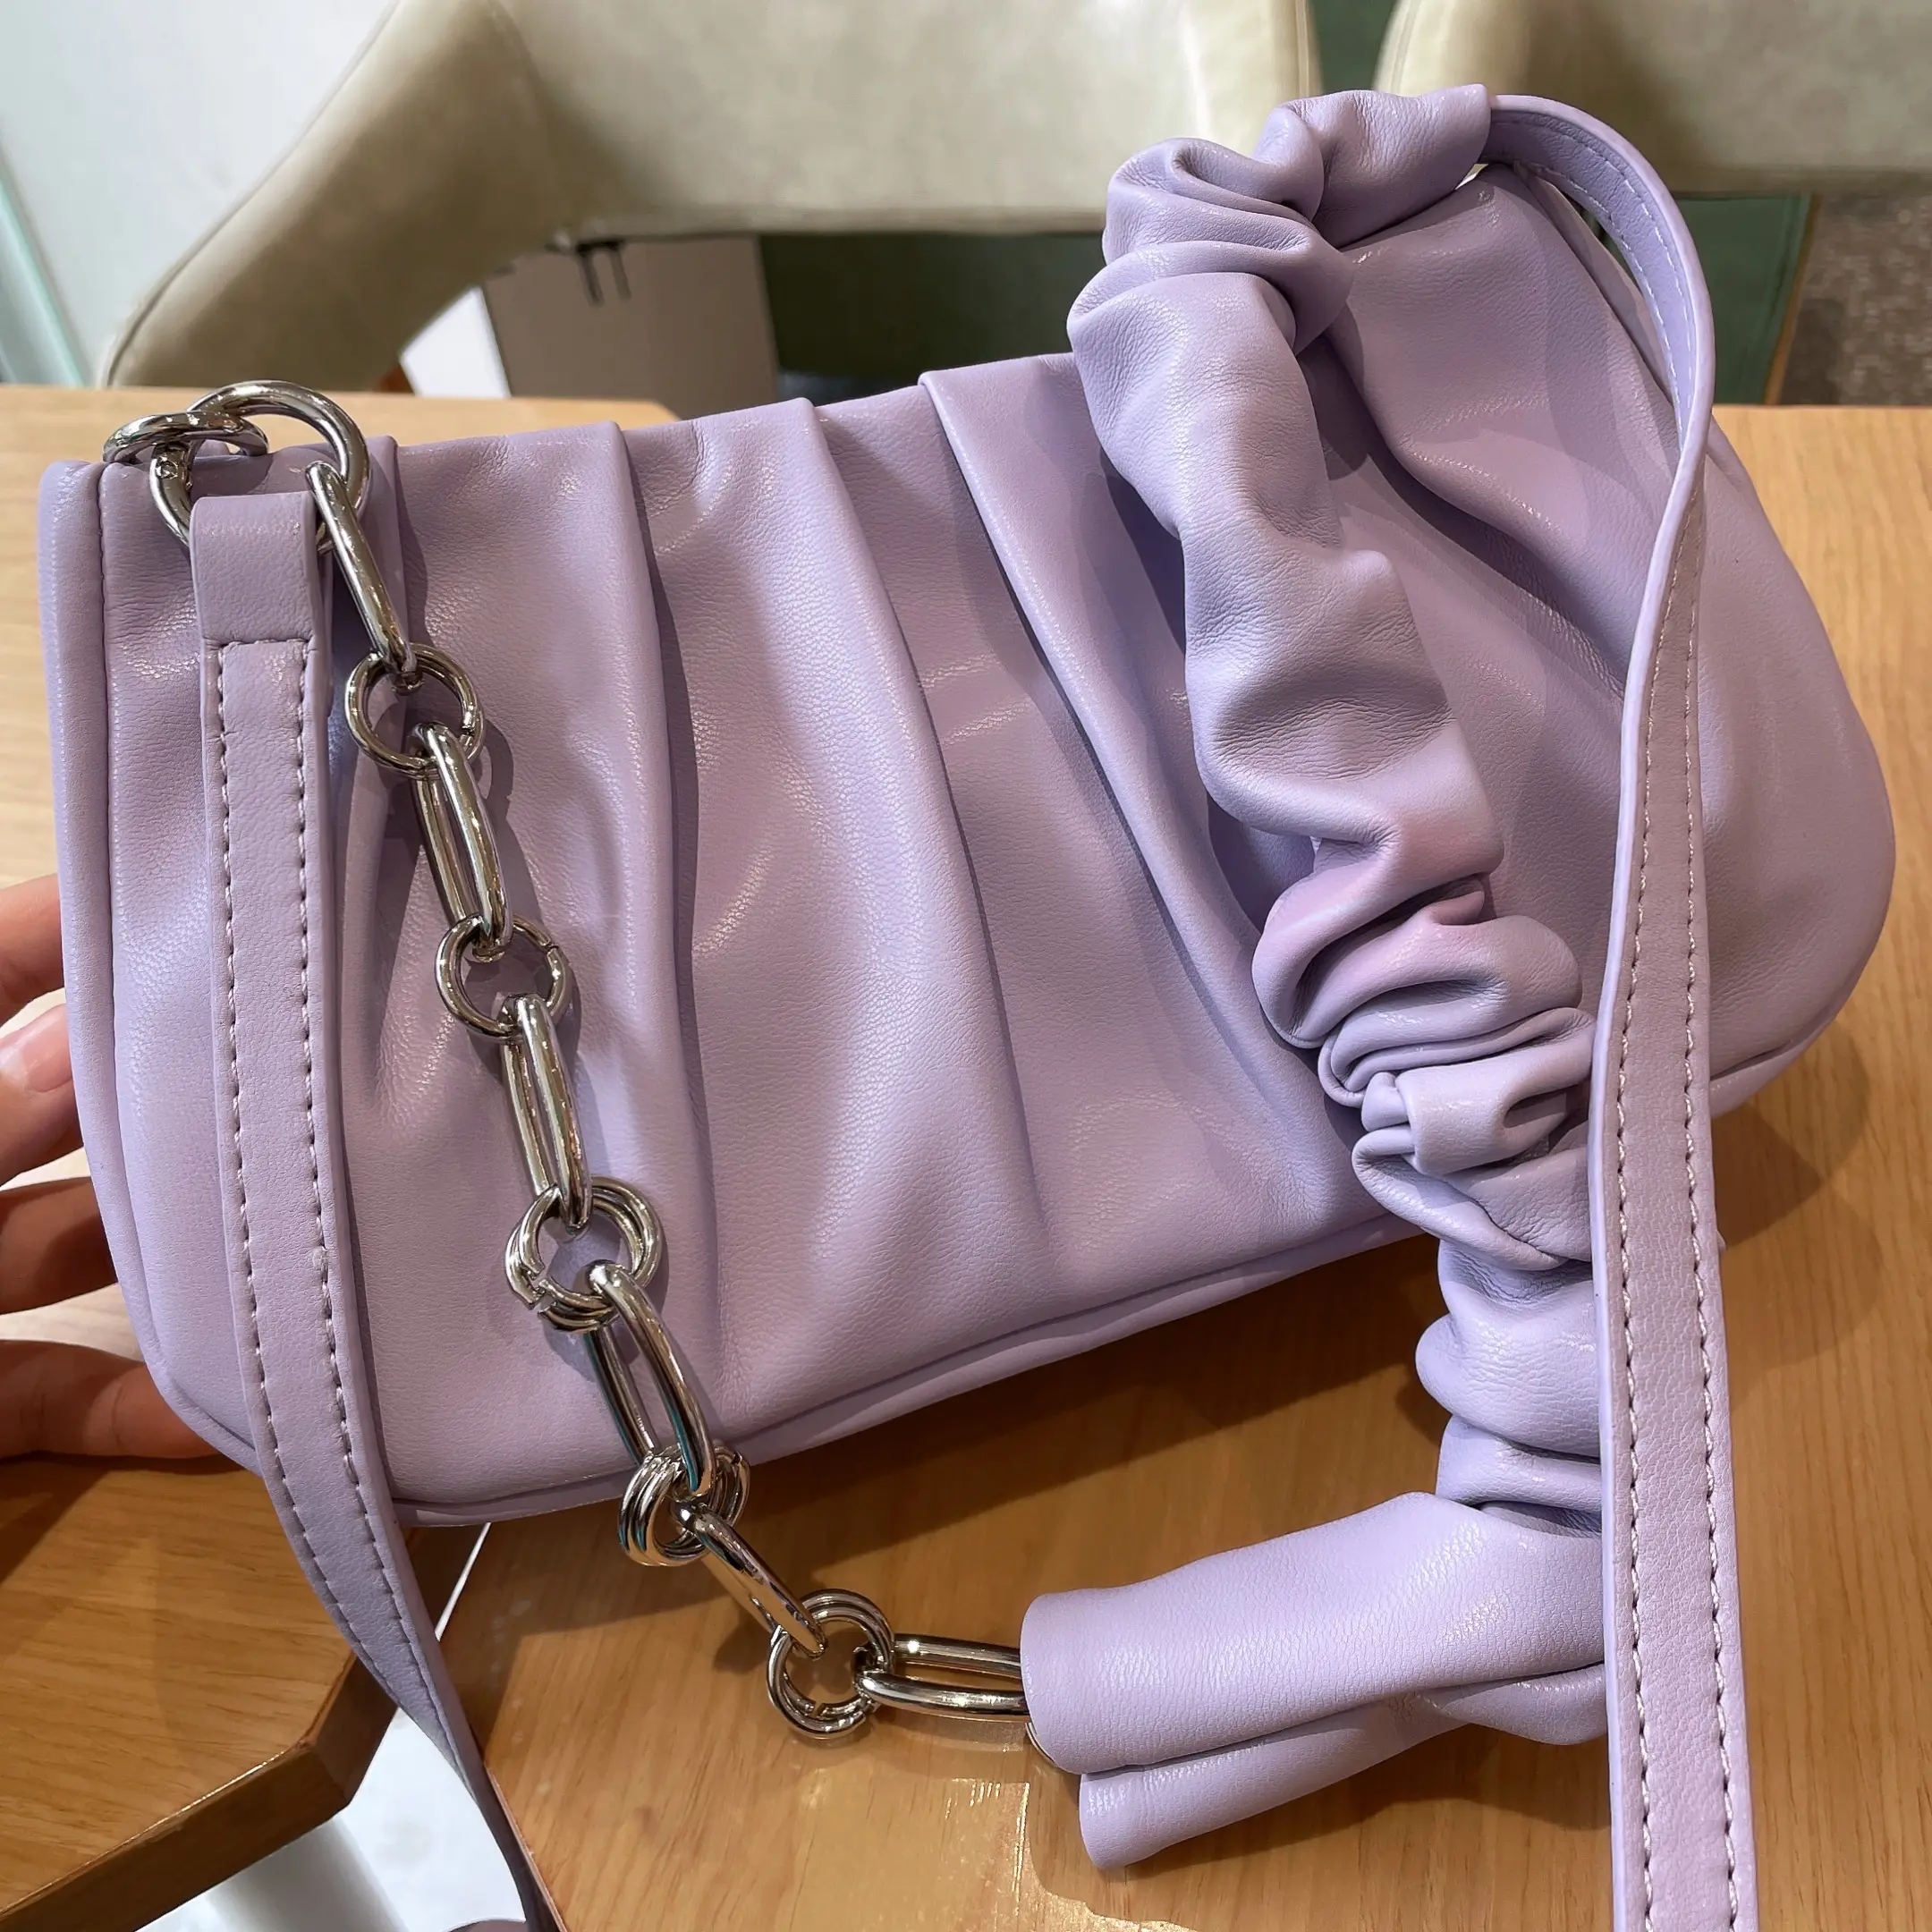 Mini small handbags name brand purses and ladies handbags luxury bags Scarves wrist designer bags bags women handbags ladies